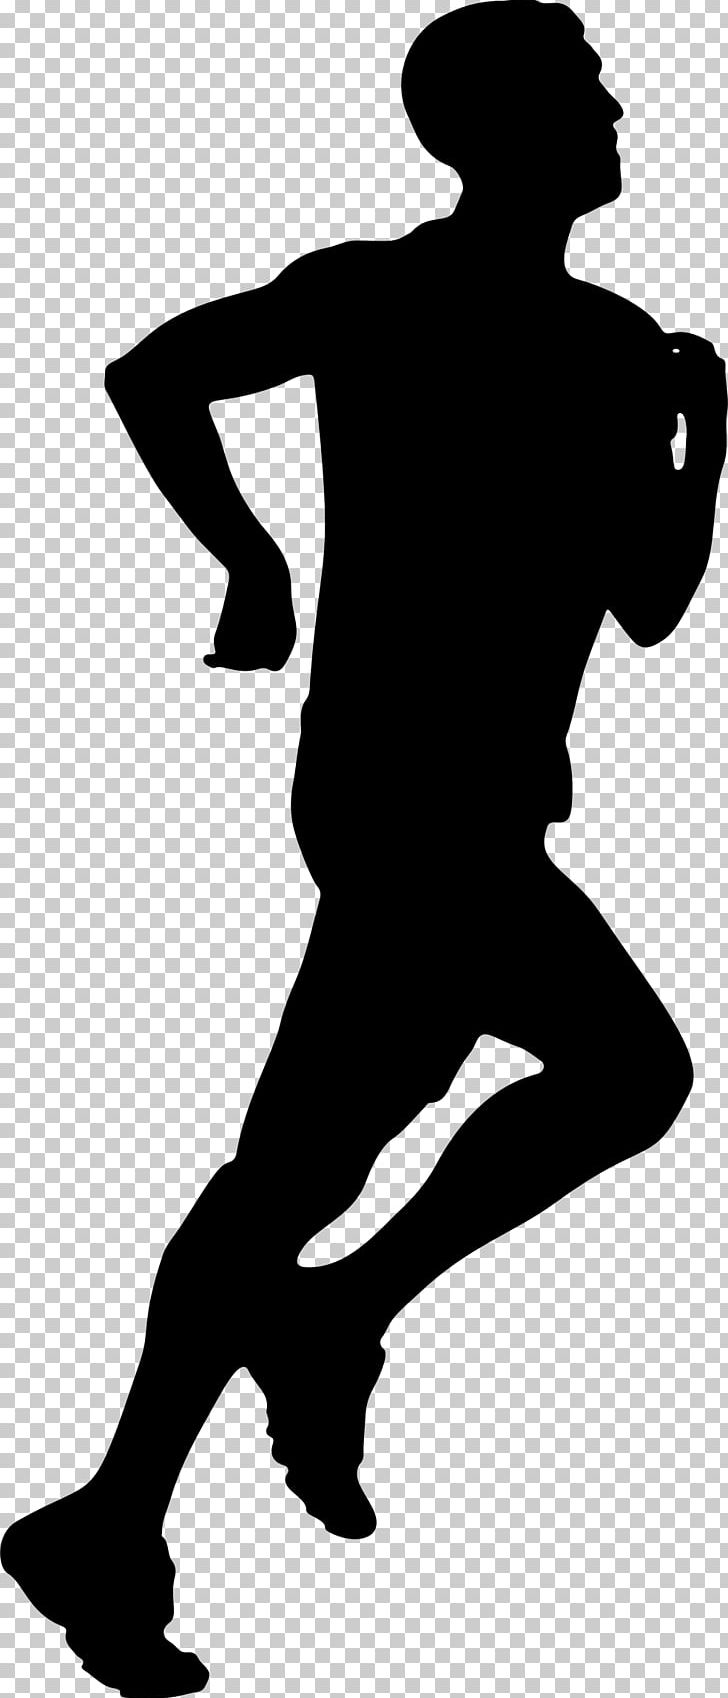 Jogging Silhouette Running PNG, Clipart, Art, Black, Black.